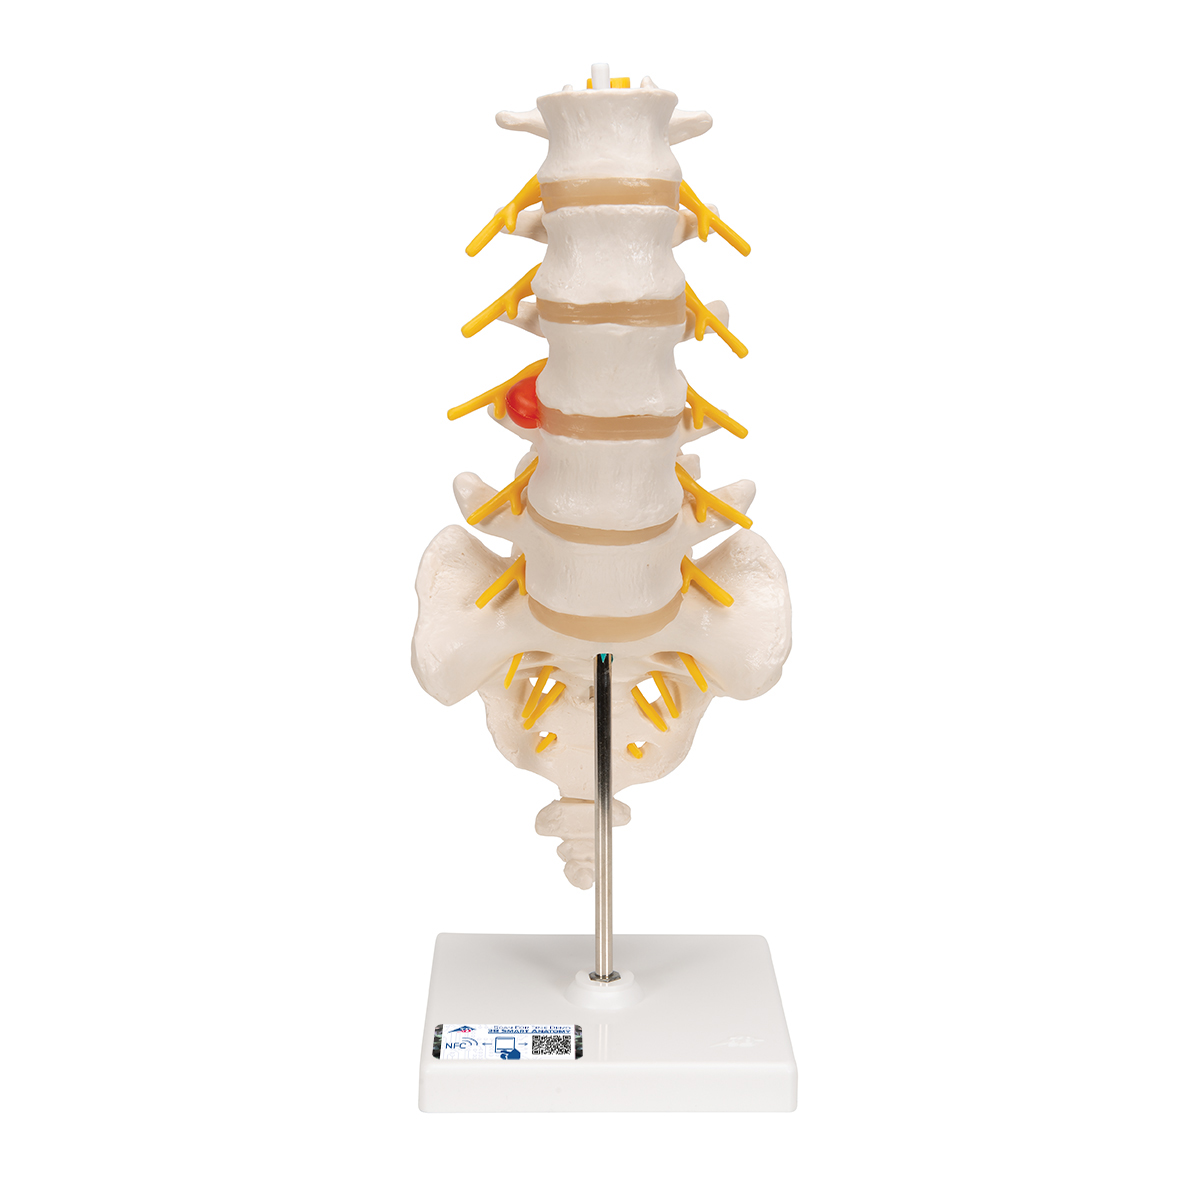 Lendenwirbelsäulenmodell mit dorsolateralem Bandscheibenvorfall - 3B Smart Anatomy, Bestellnummer 1000150, A76/5, 3B Scientific